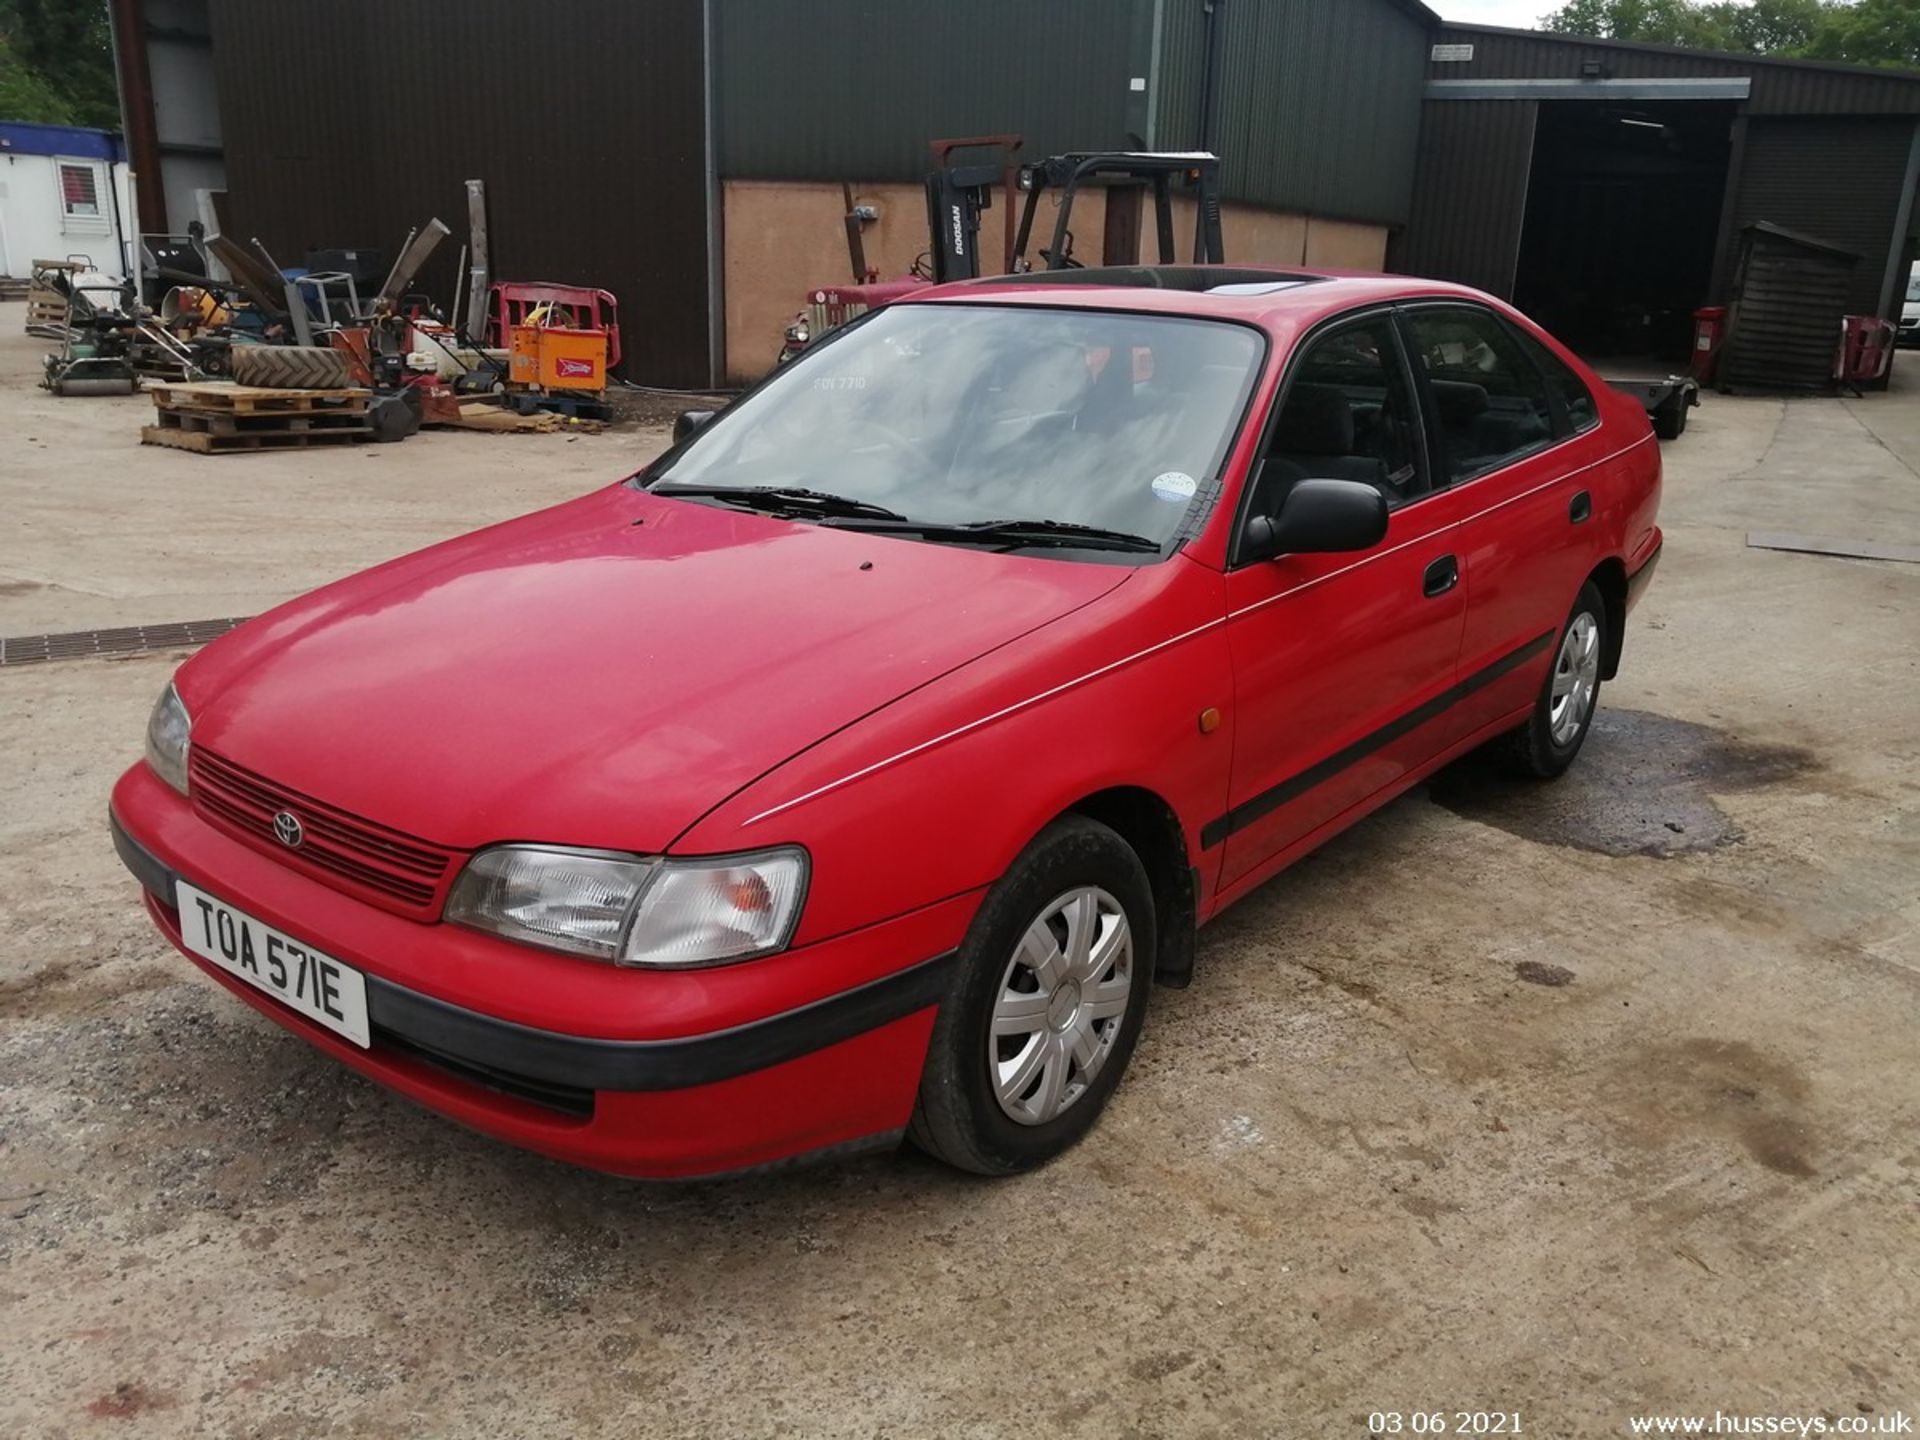 1993 TOYOTA CARINA E GLI AUTO - 1587cc 5dr Hatchback (Red)